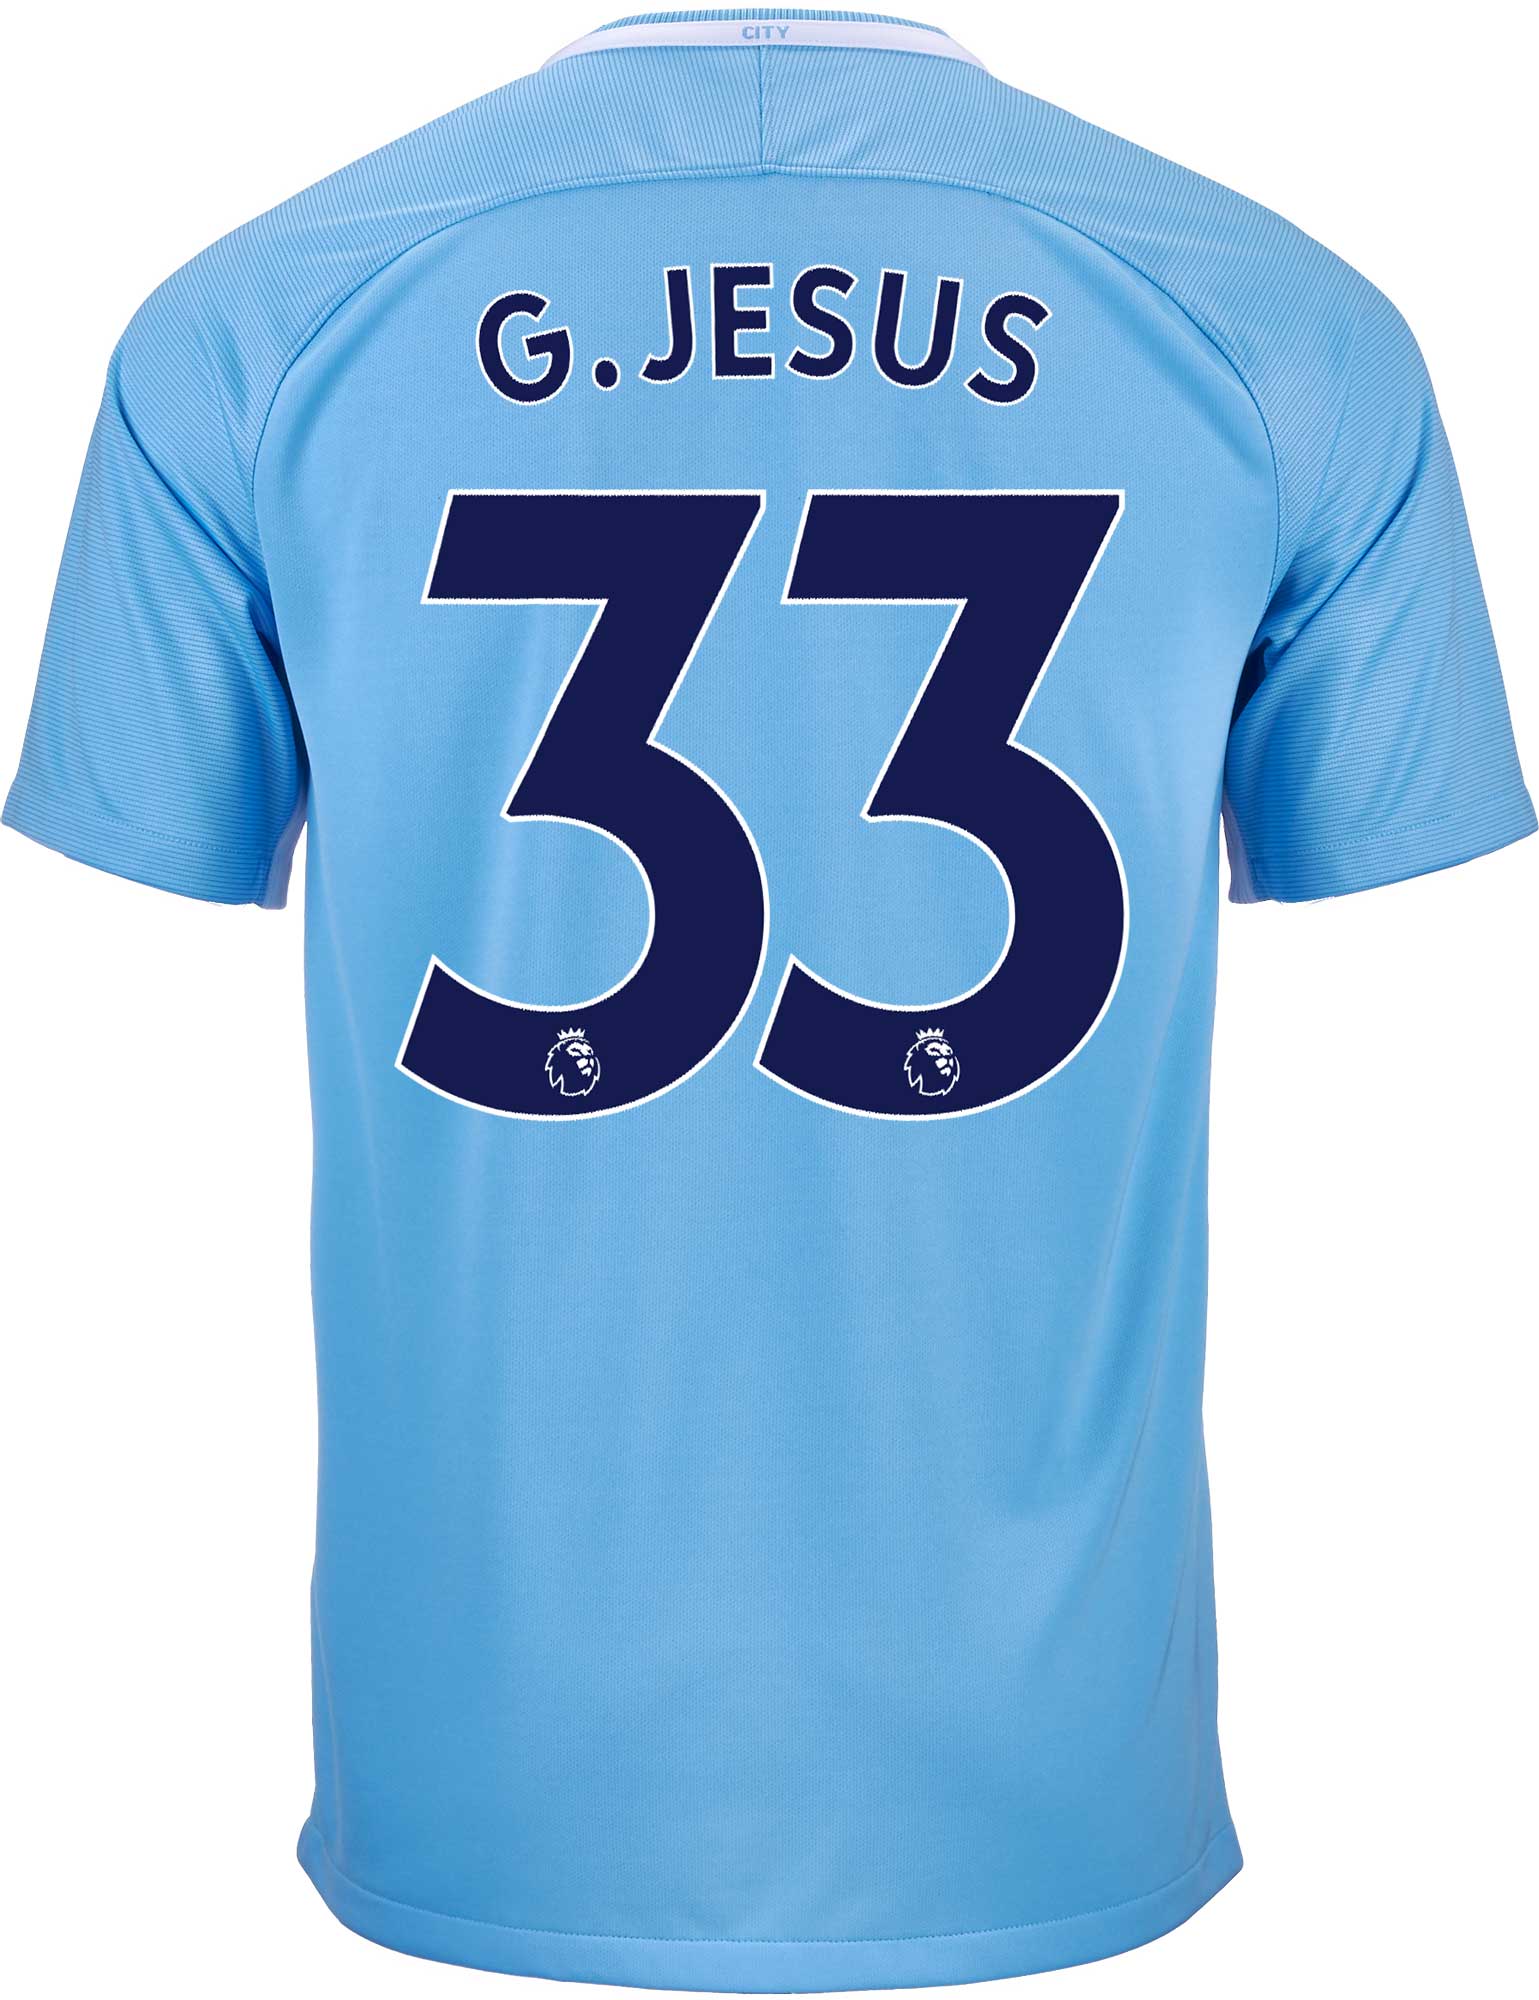 gabriel jesus jersey number